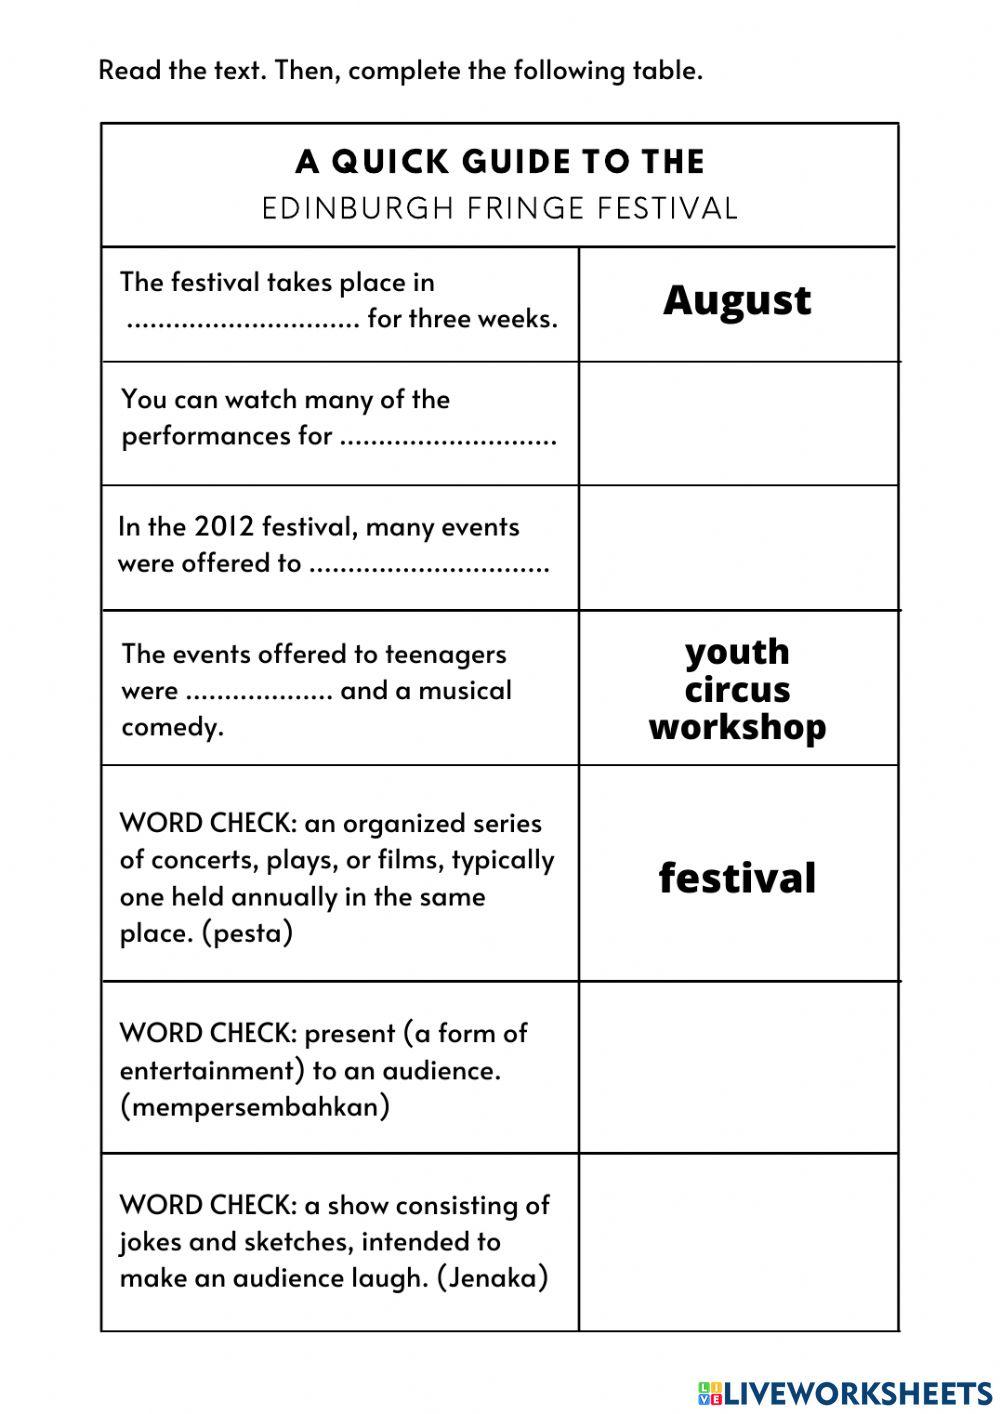 A Quick Guide to the Edinburgh Fringe Festival - Pulse 2